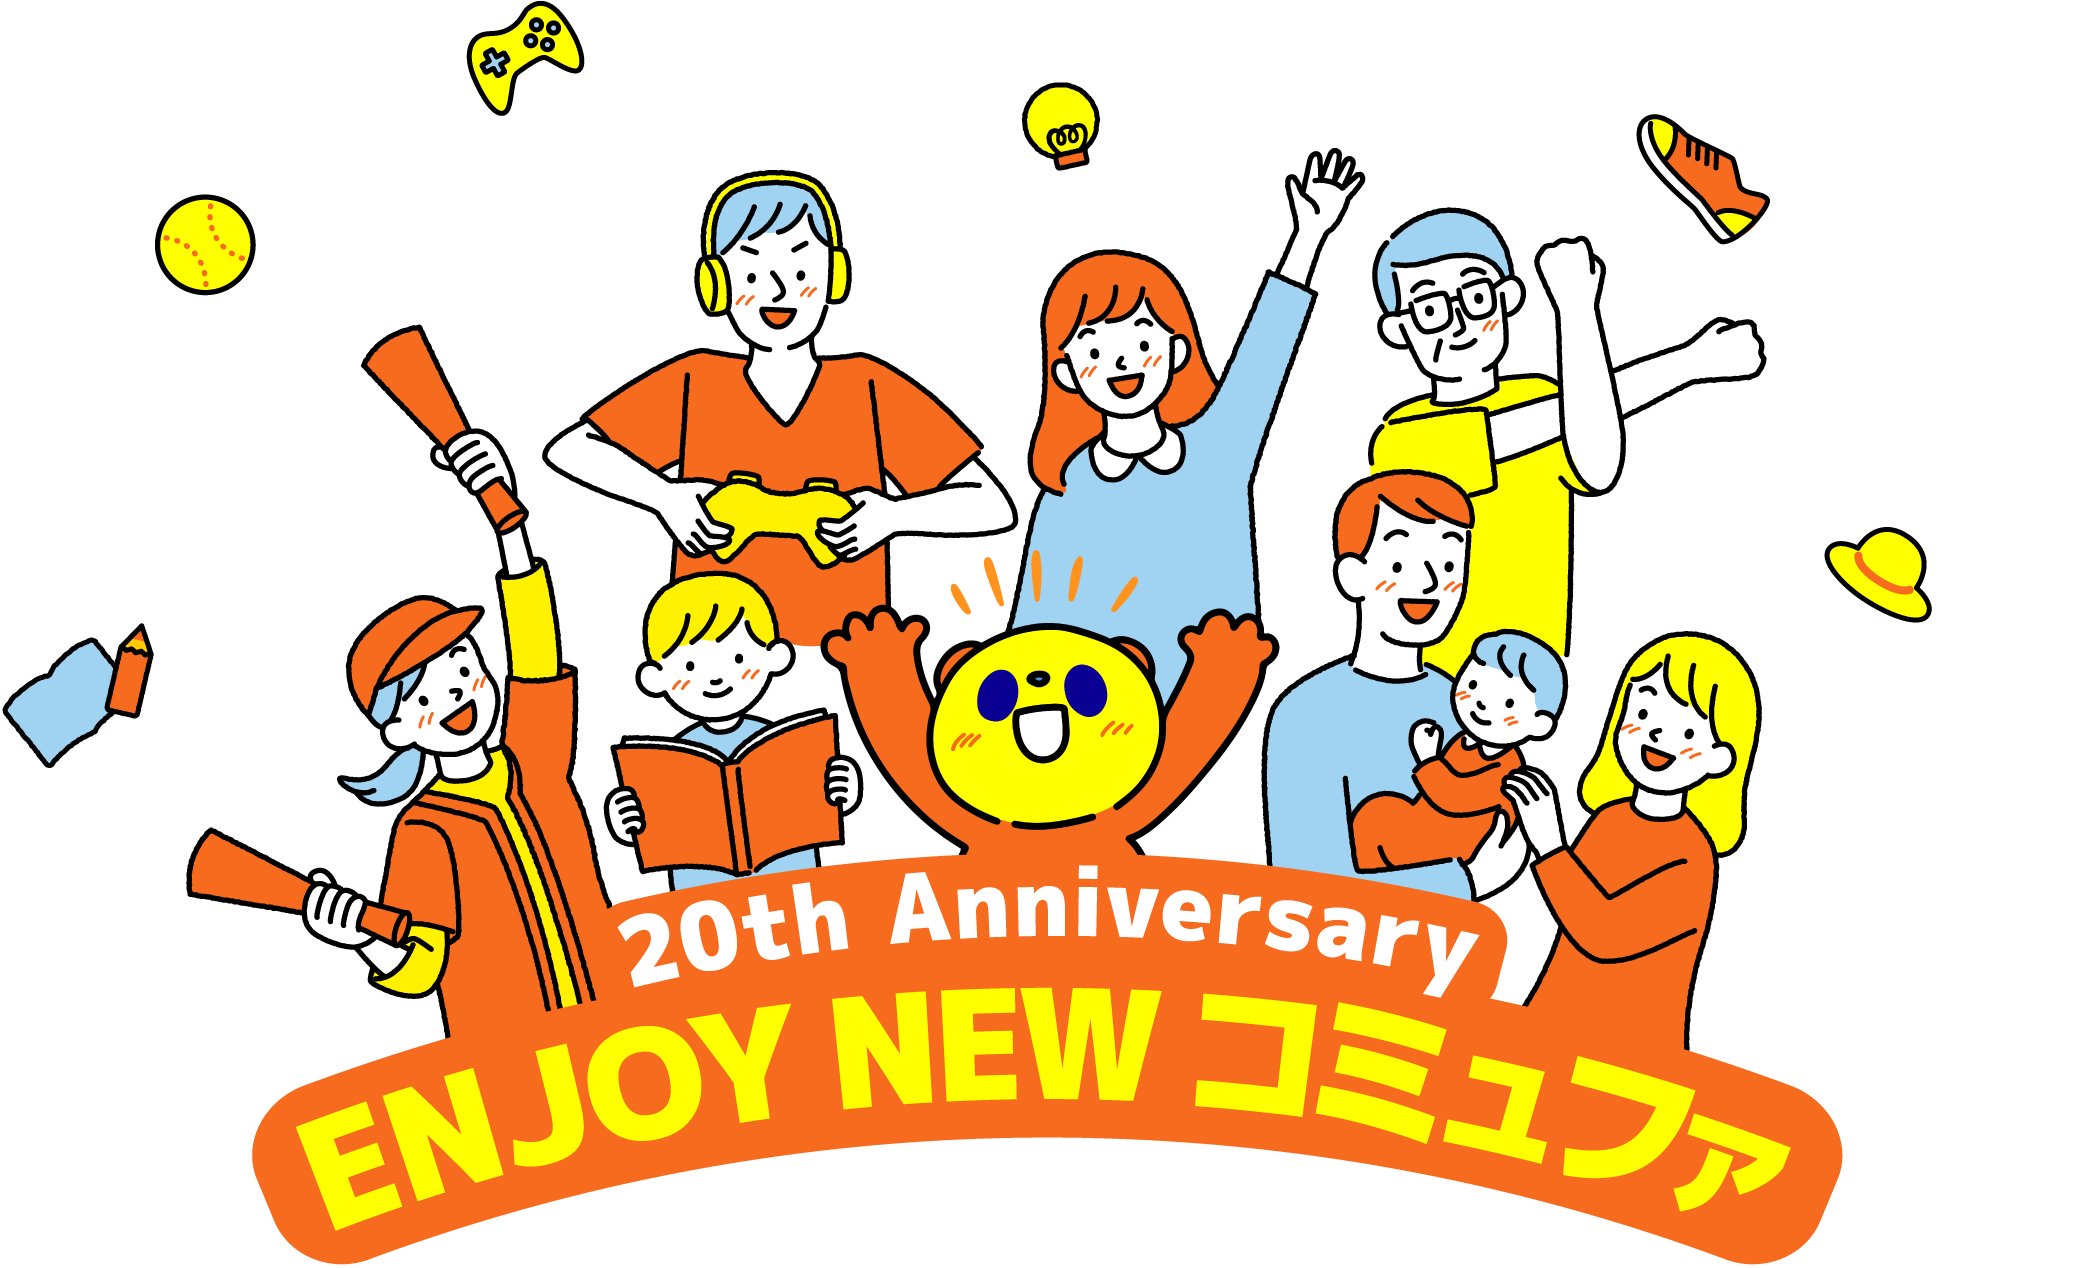 20th Anniversary ENJOY NEW コミュファ